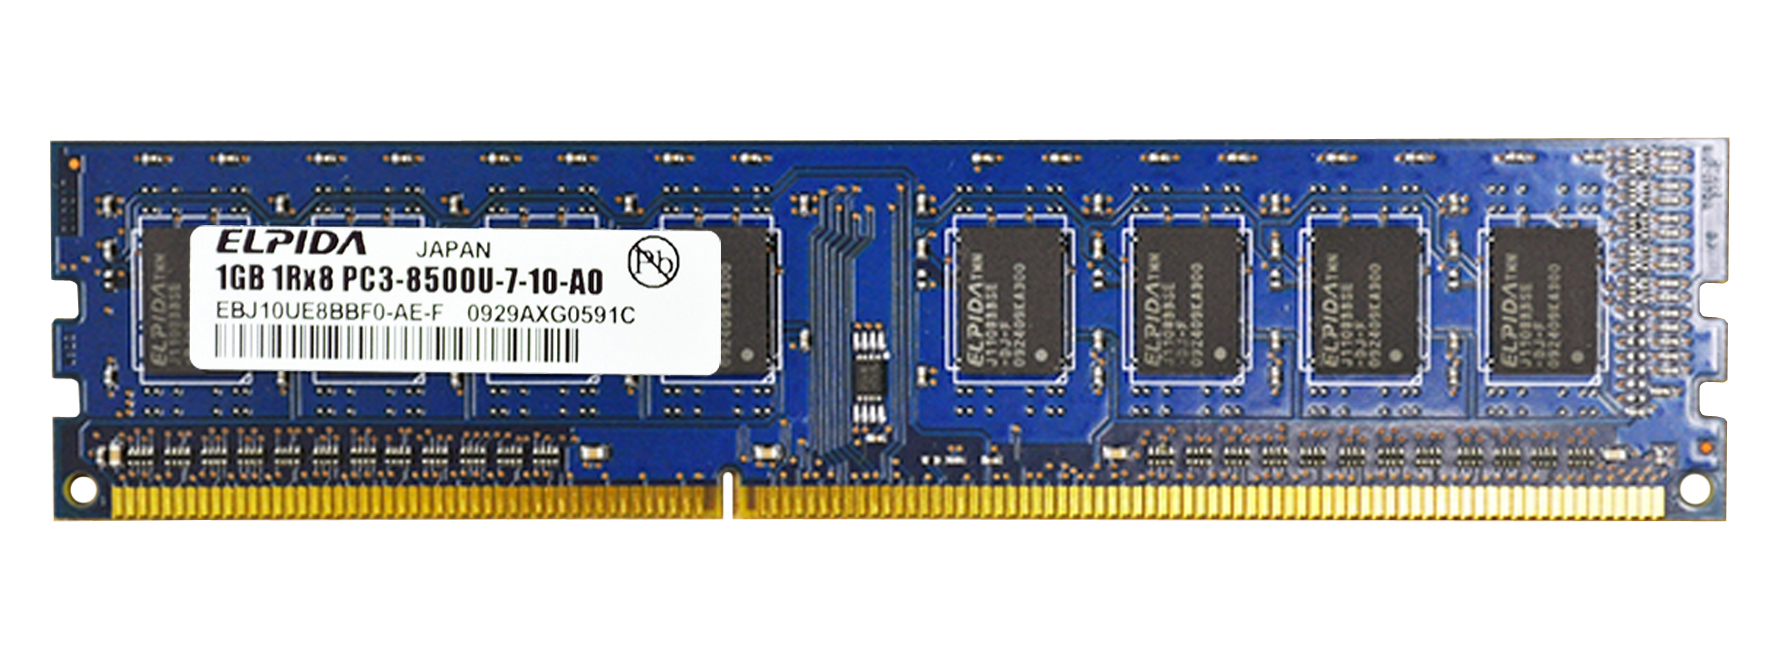 3D-13D343N647974-1G 1GB Module DDR3 PC3-8500 CL=7 non-ECC Unbuffered DDR3-1066 1.5V 128Meg x 64 for Biostar A770E3 Motherboard n/a